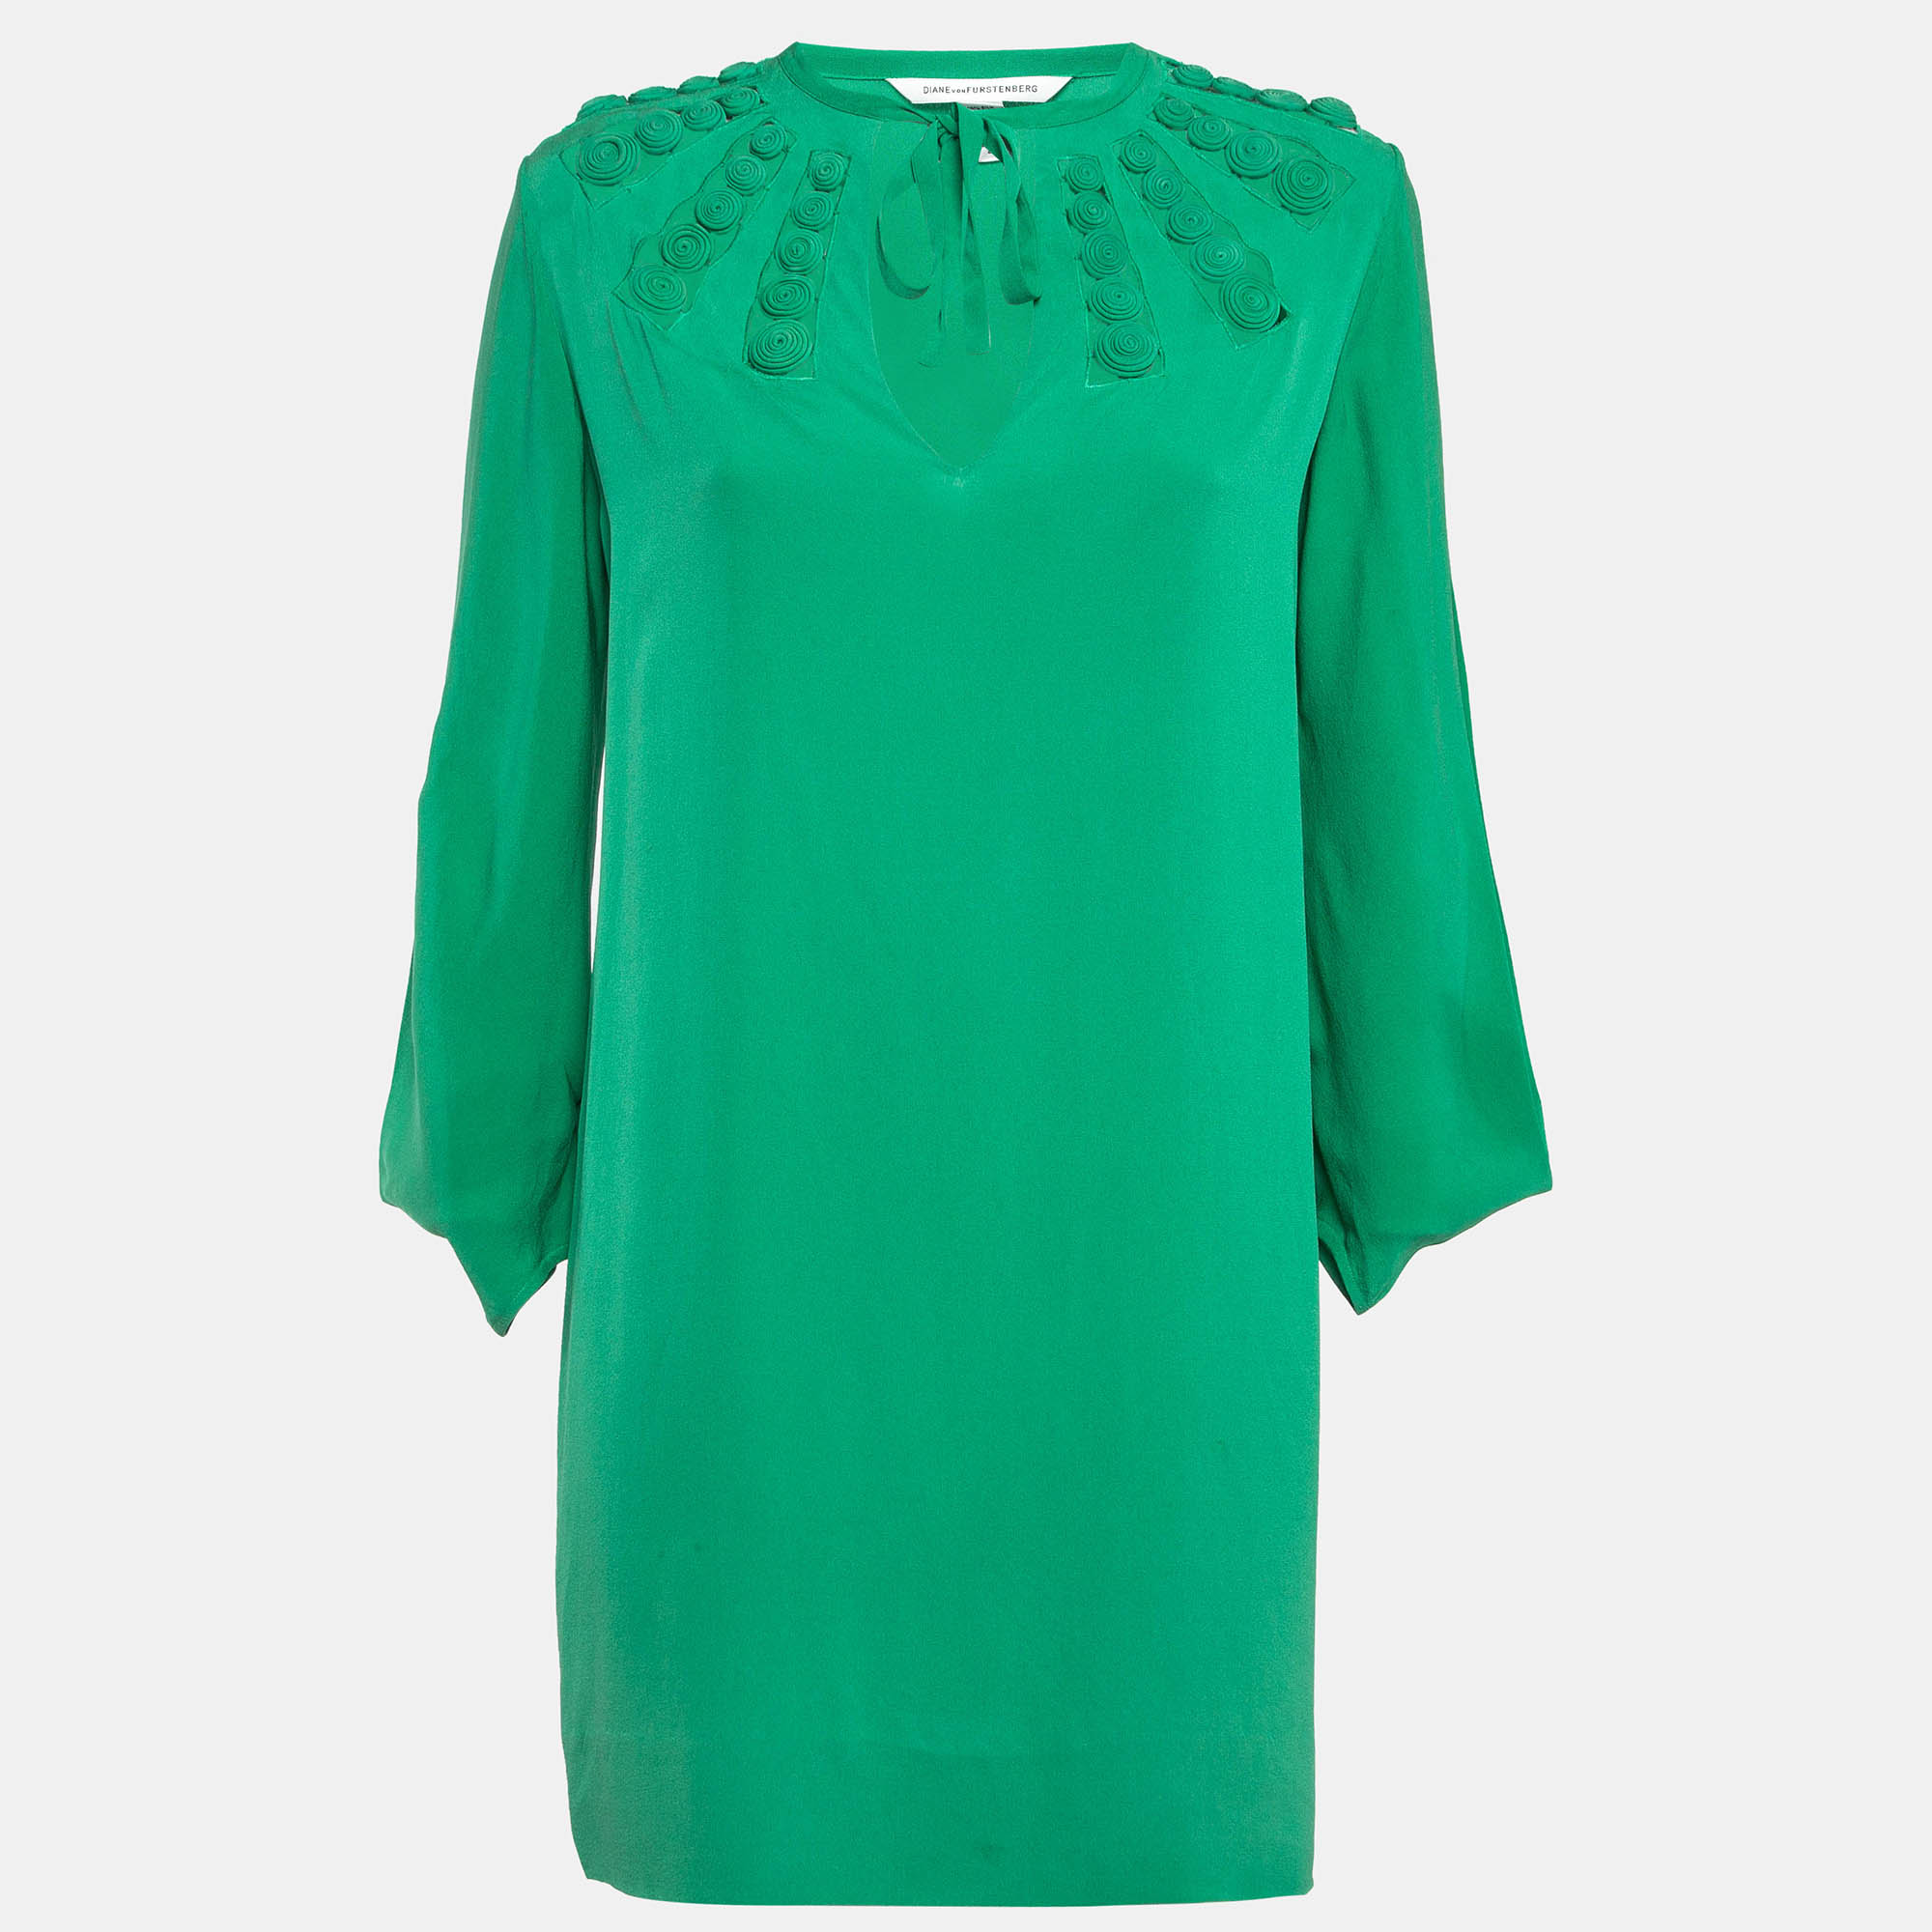 Diane von furstenberg green silk long sleeve mini dress s